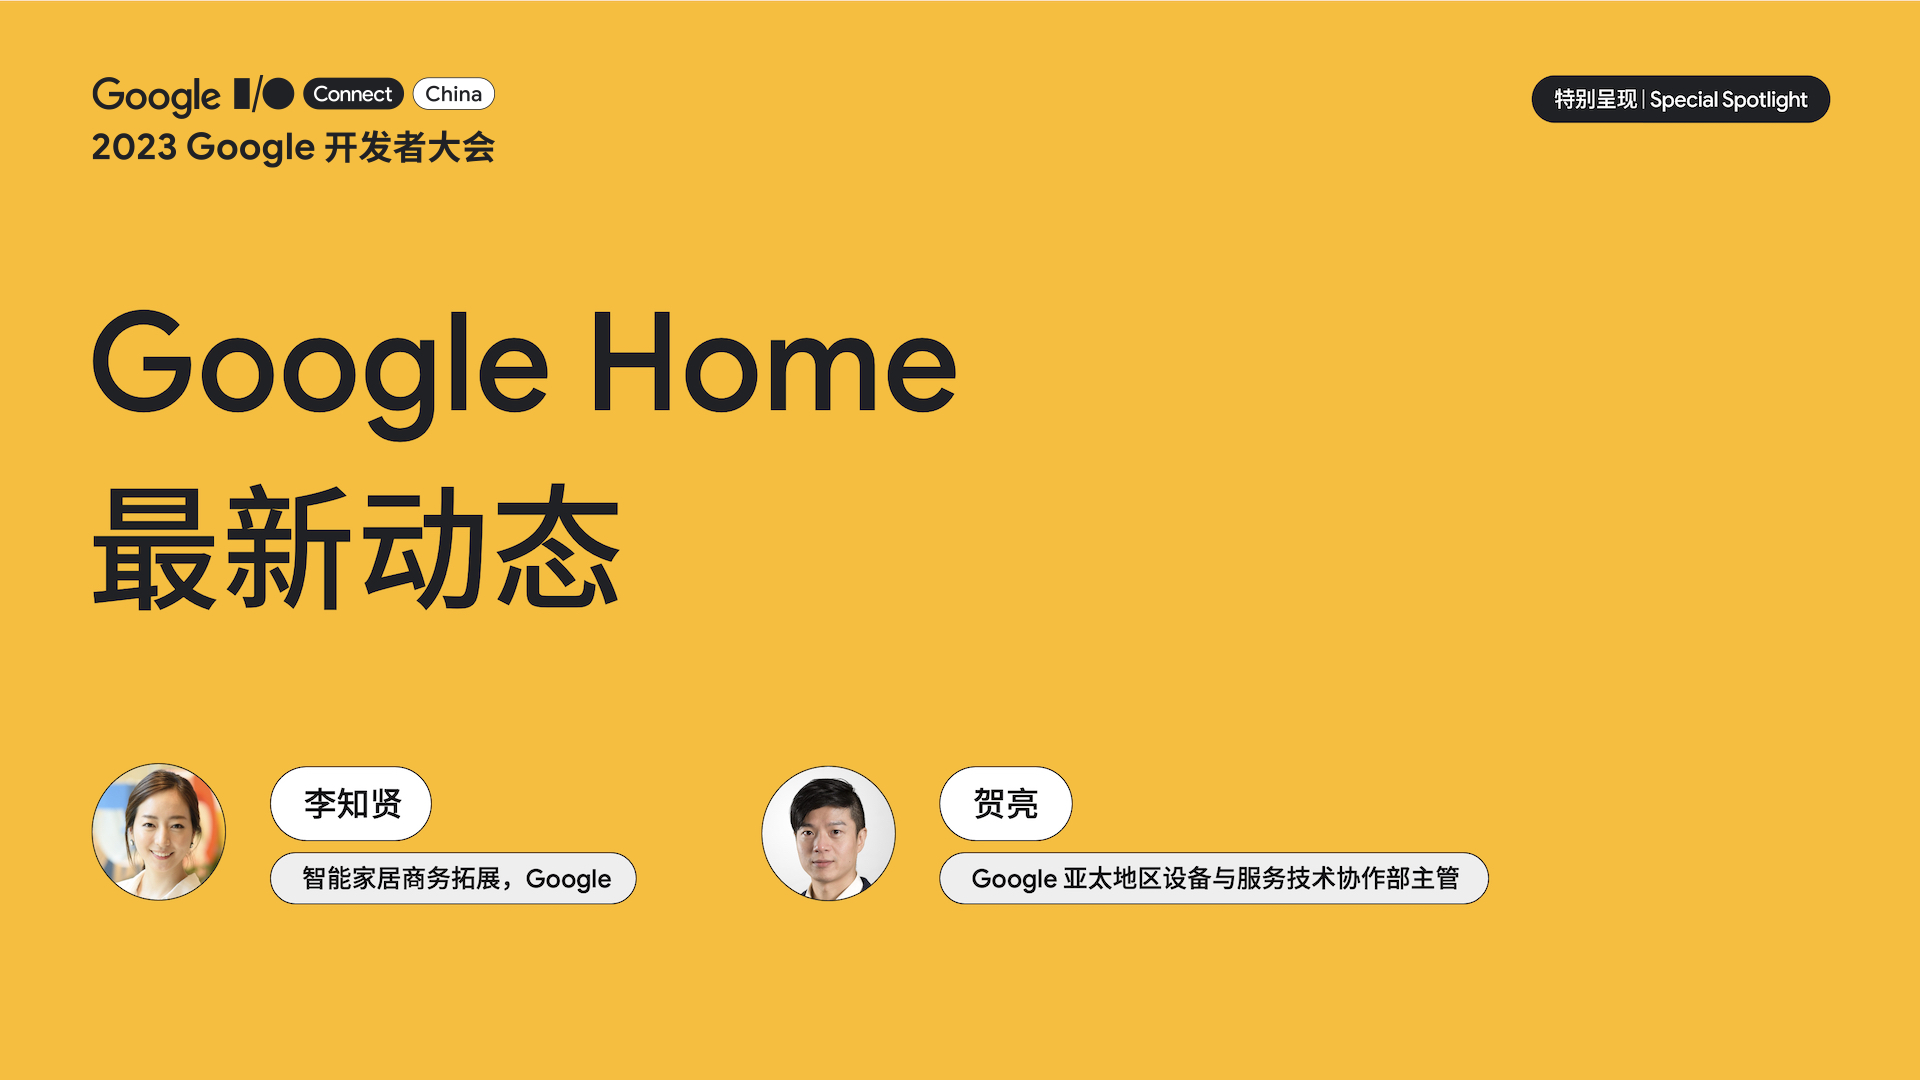  Google Home Update